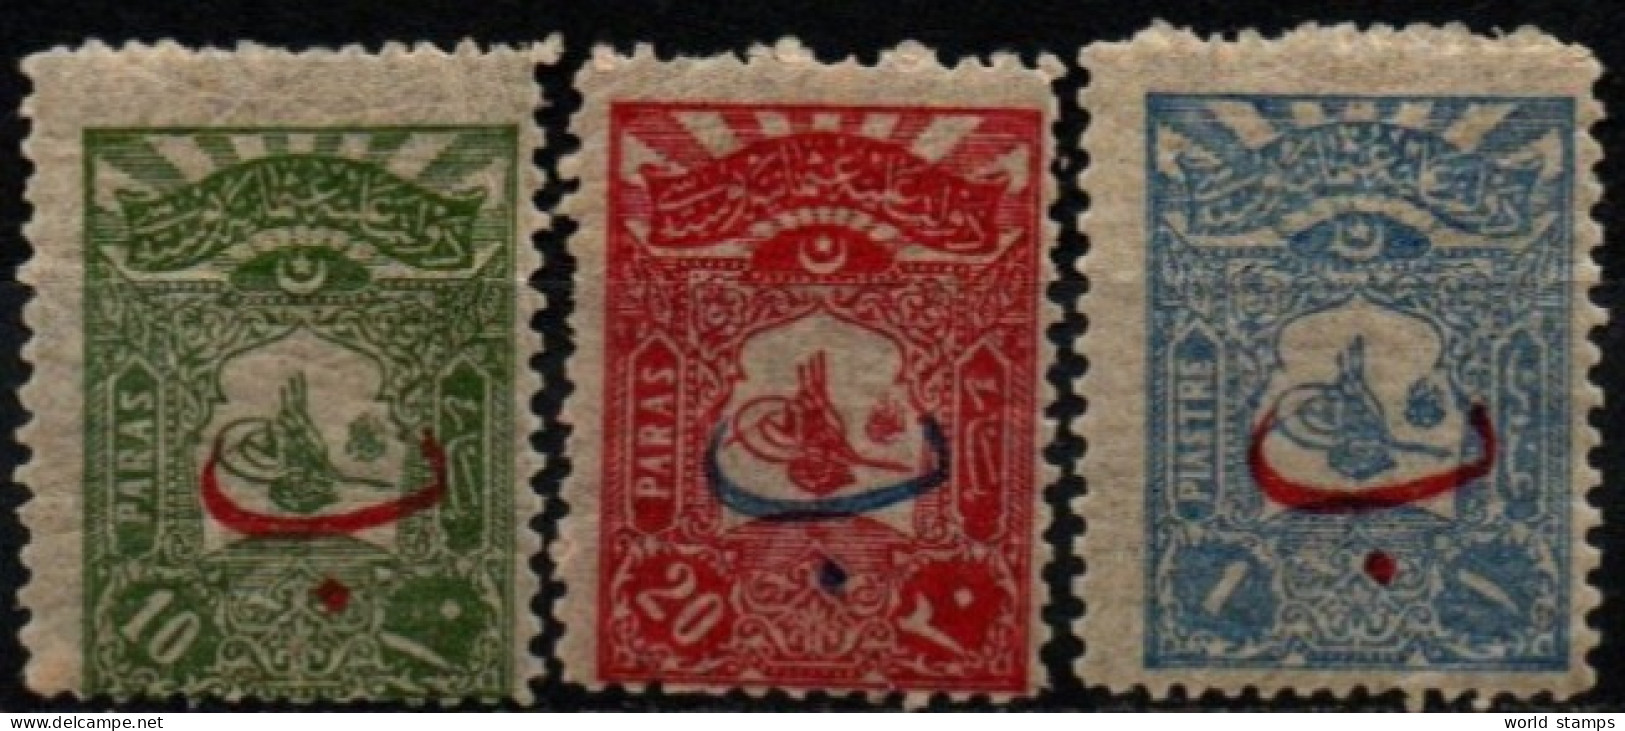 TURQUIE 1905-6 * - Unused Stamps